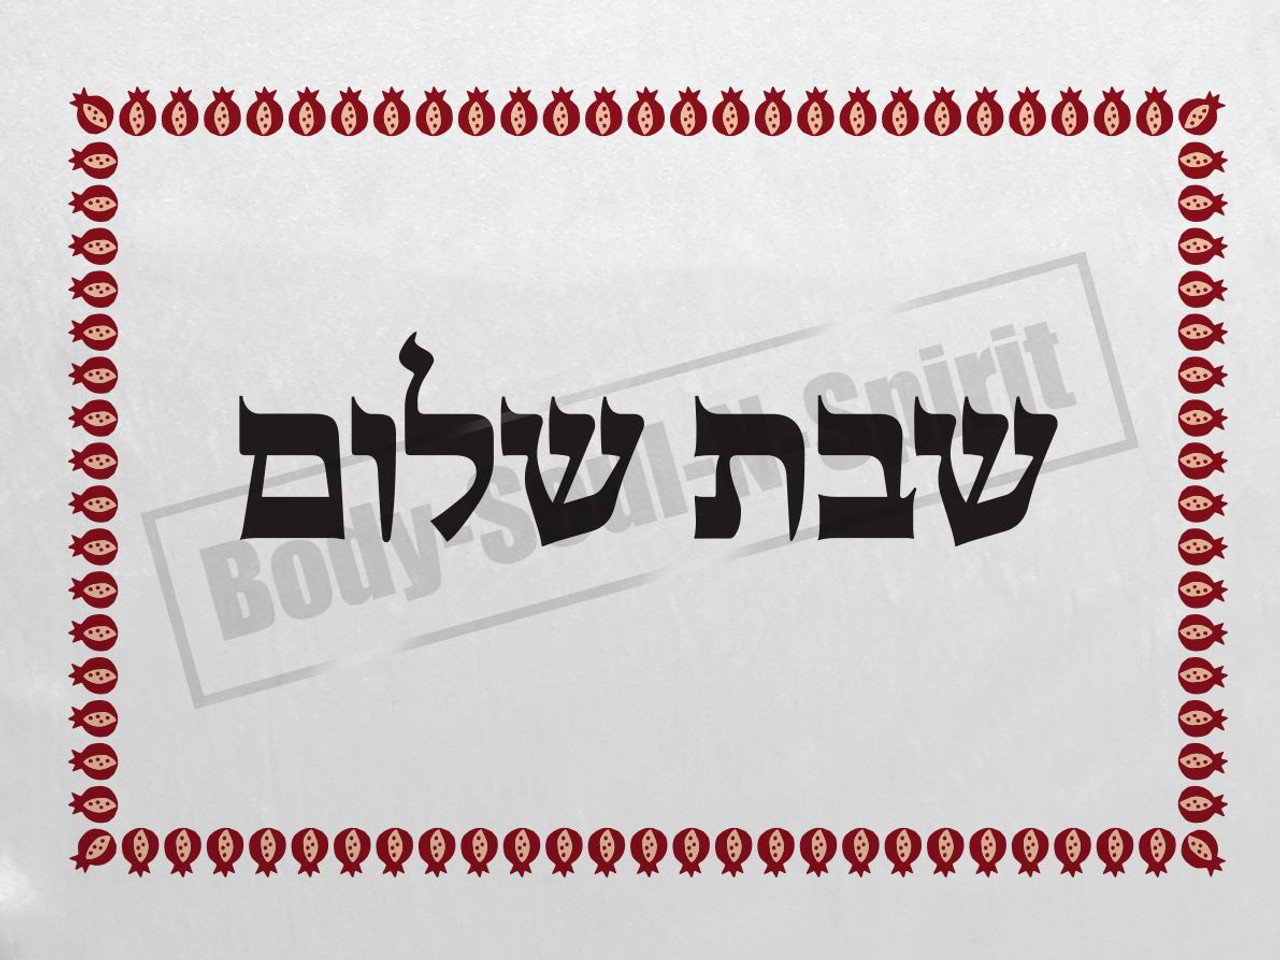 Shabbat/Yom Tov